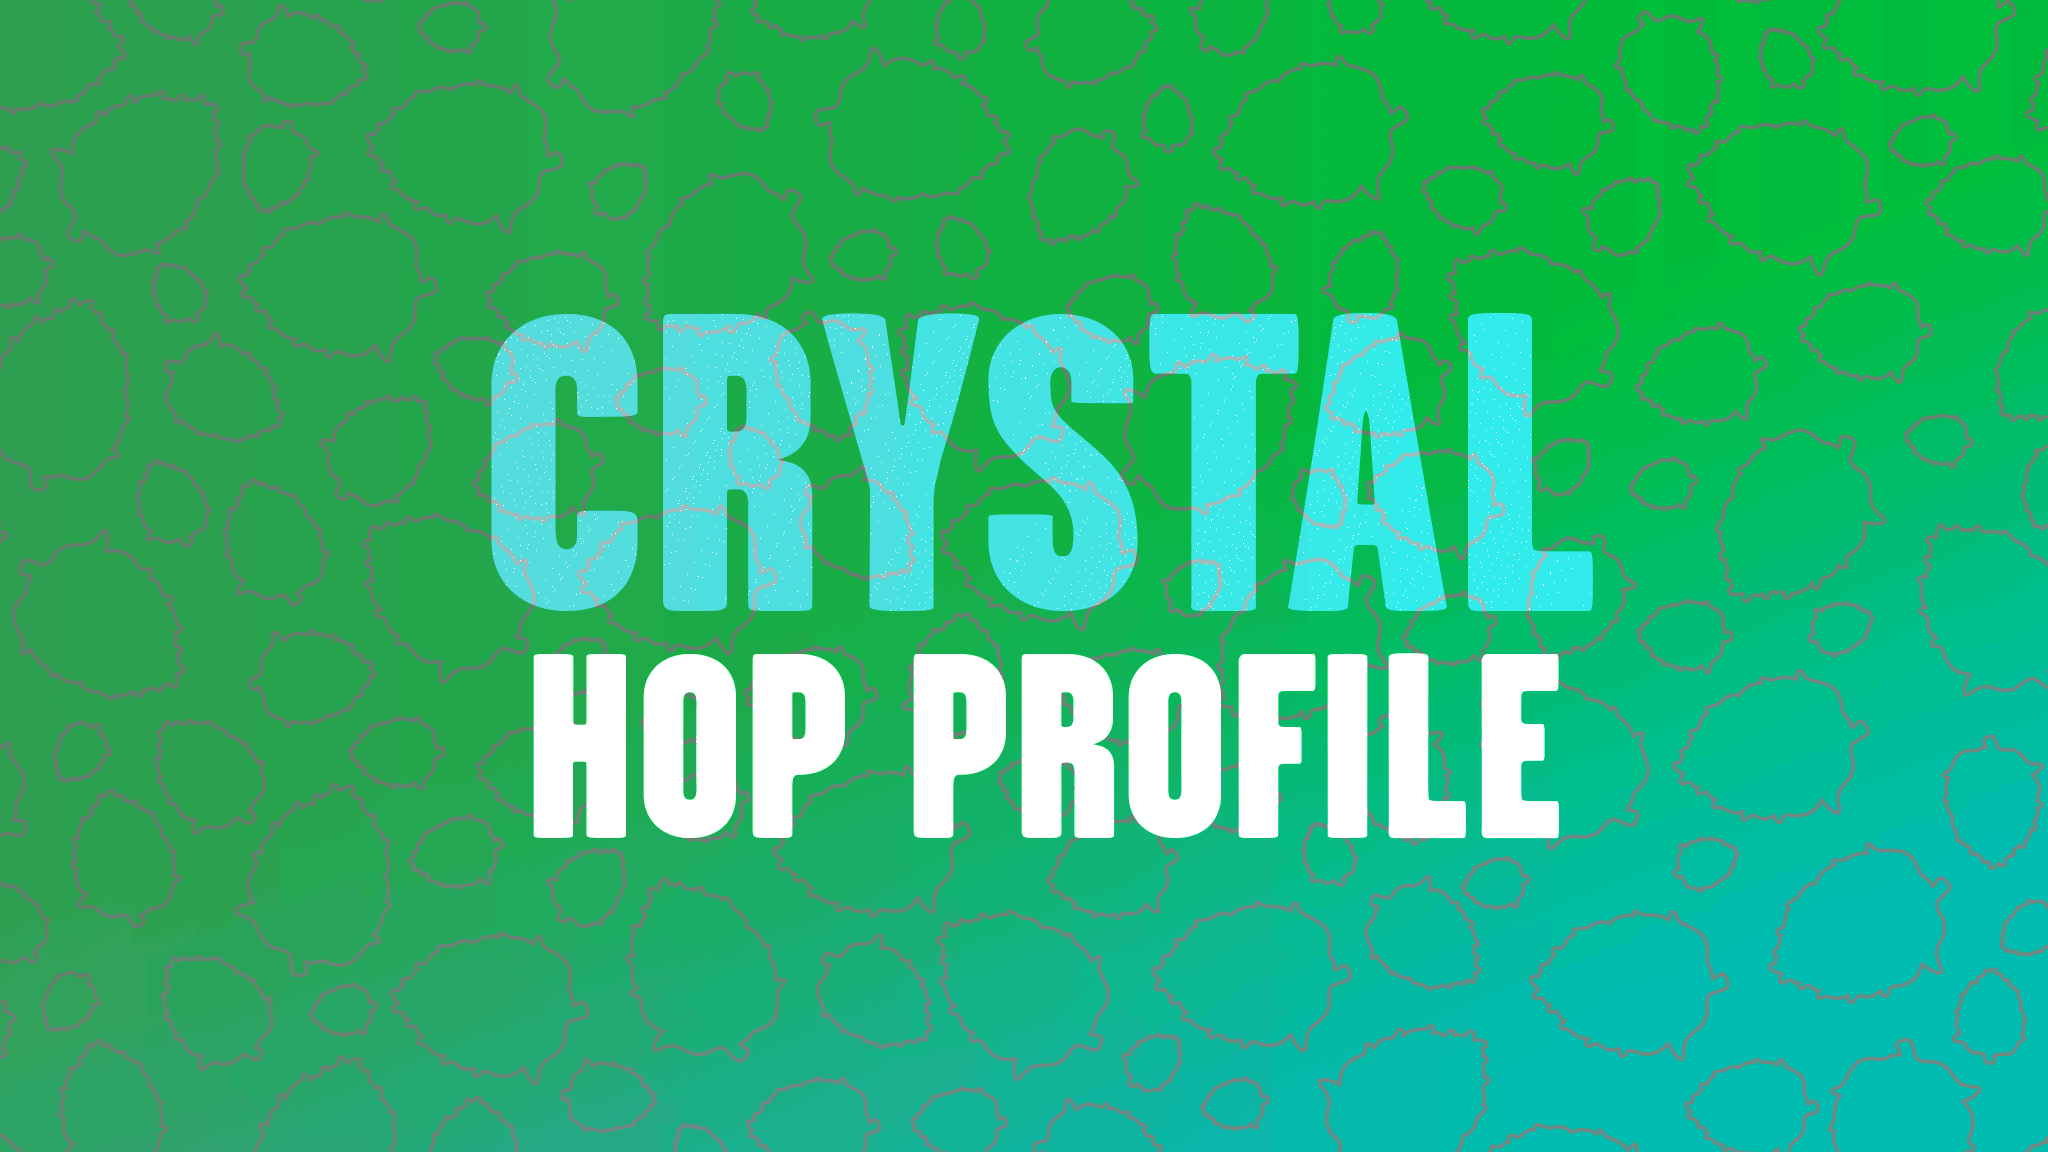 Hop Profile: Crystal